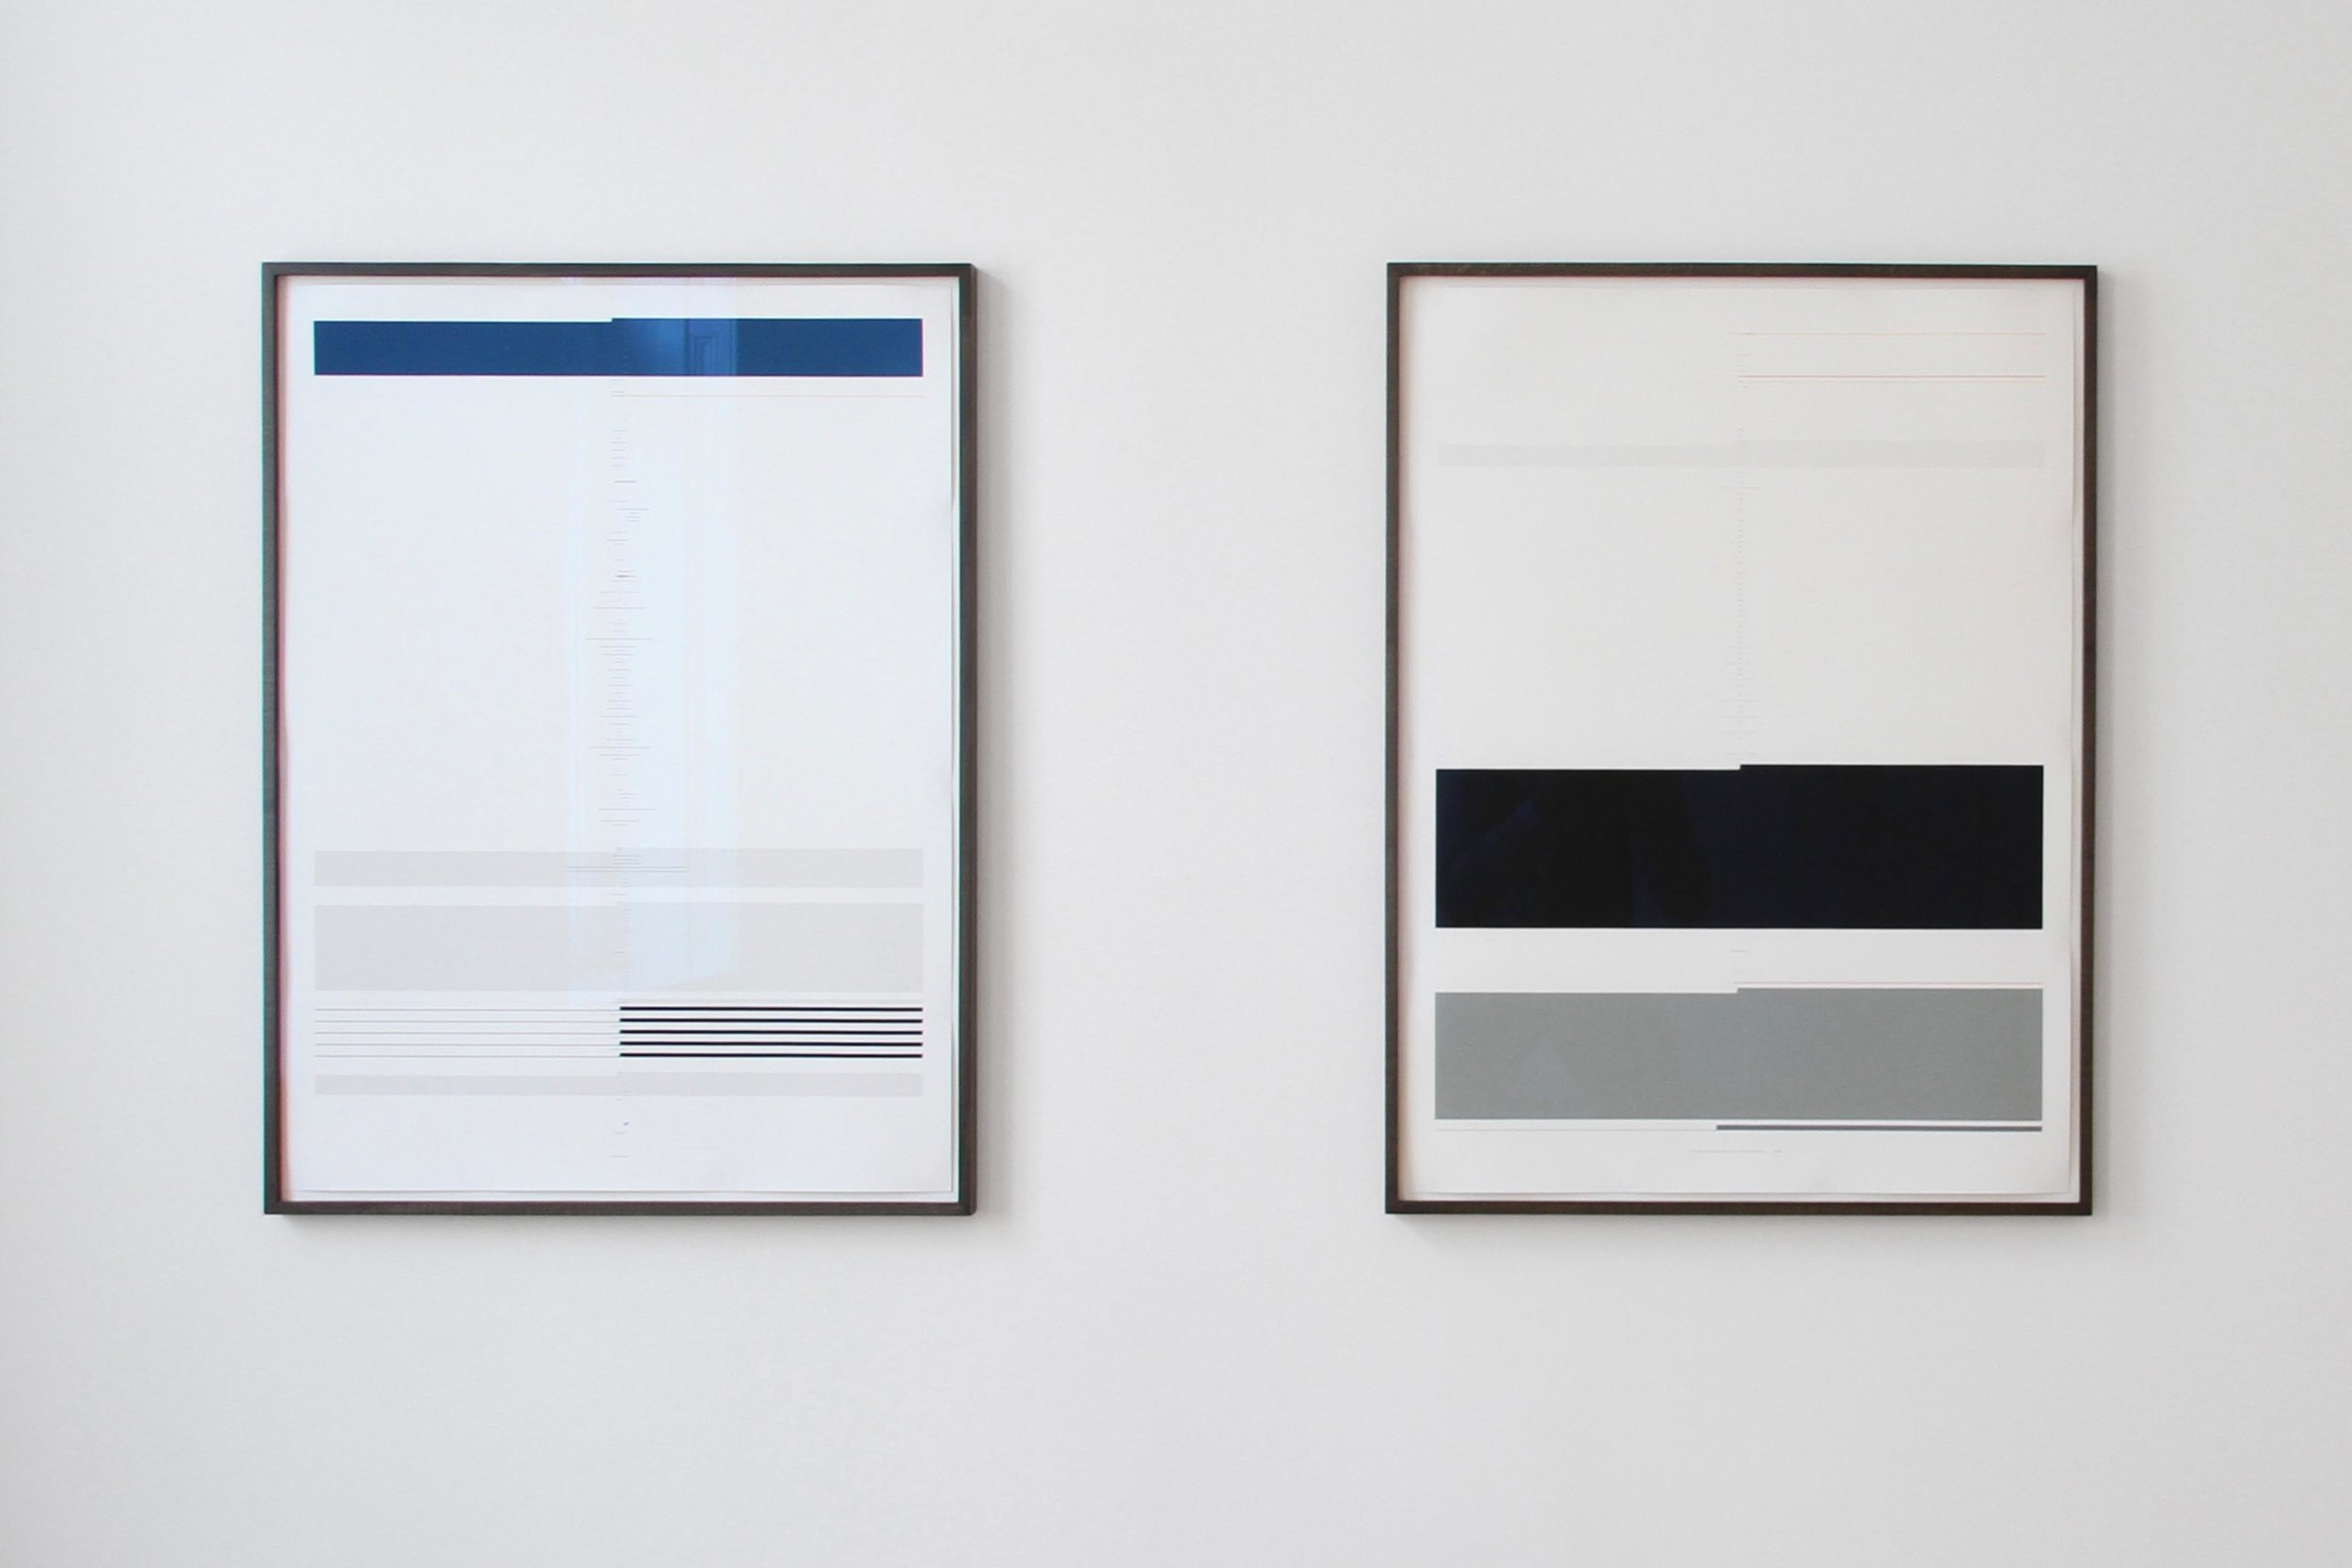 Ulrich Nausner, L.:Untitled (Perception), 2016, Pigmentprint on Hahnemühle 84 x 64 cm, 2 + 1AP; R.:Untitled Conception), 2016, Pigmentprint on Hahnemühle, 84 x 64 cm, 2 + 1AP